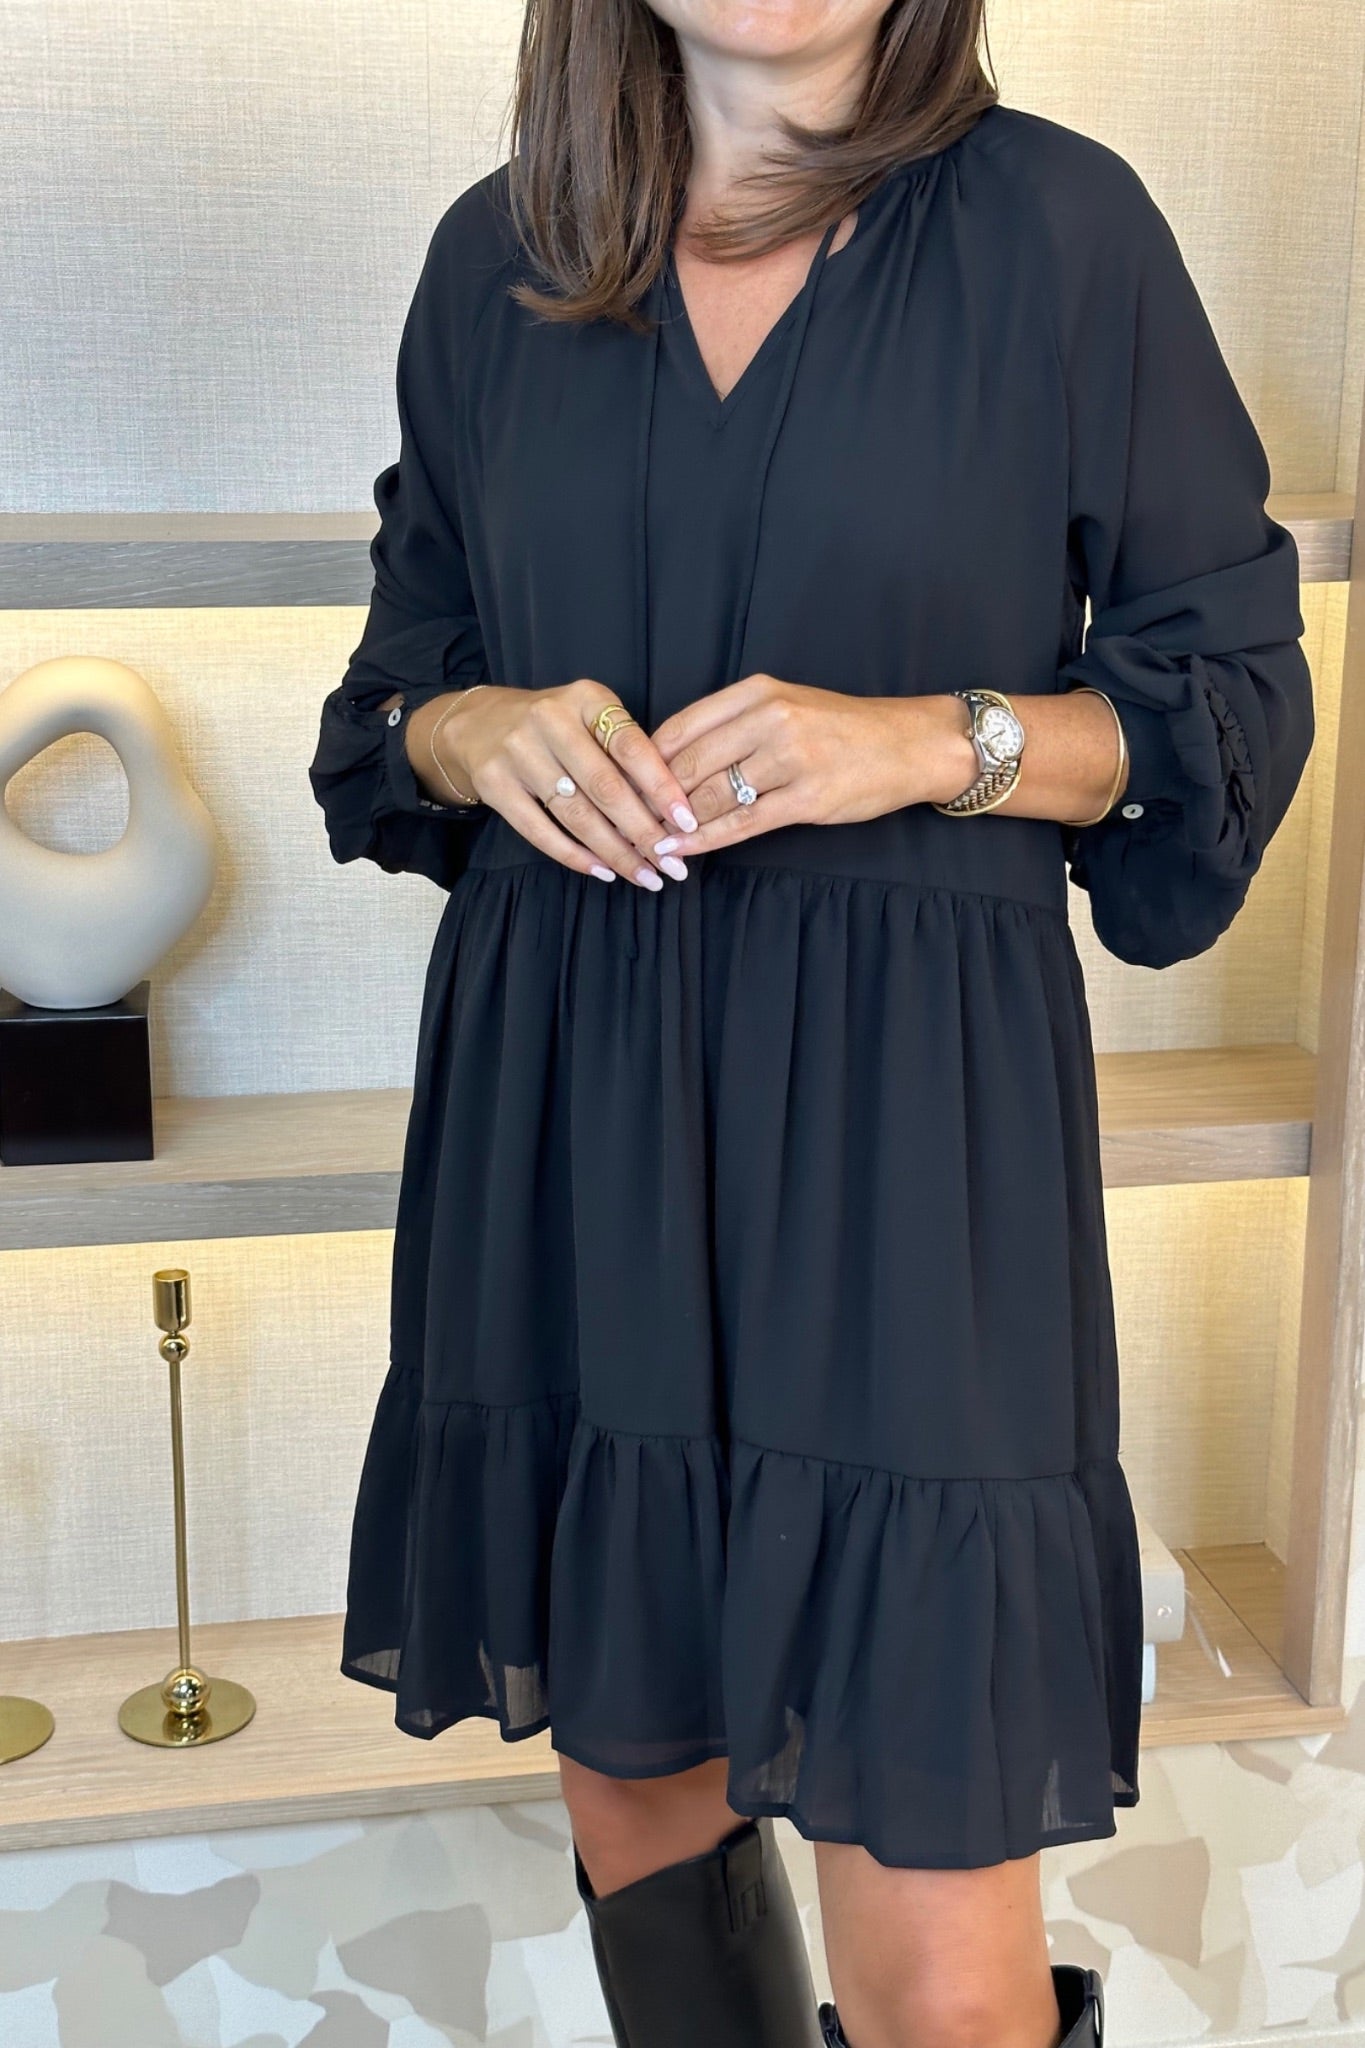 Becca Tiered Sheer Sleeve Dress In Black - The Walk in Wardrobe